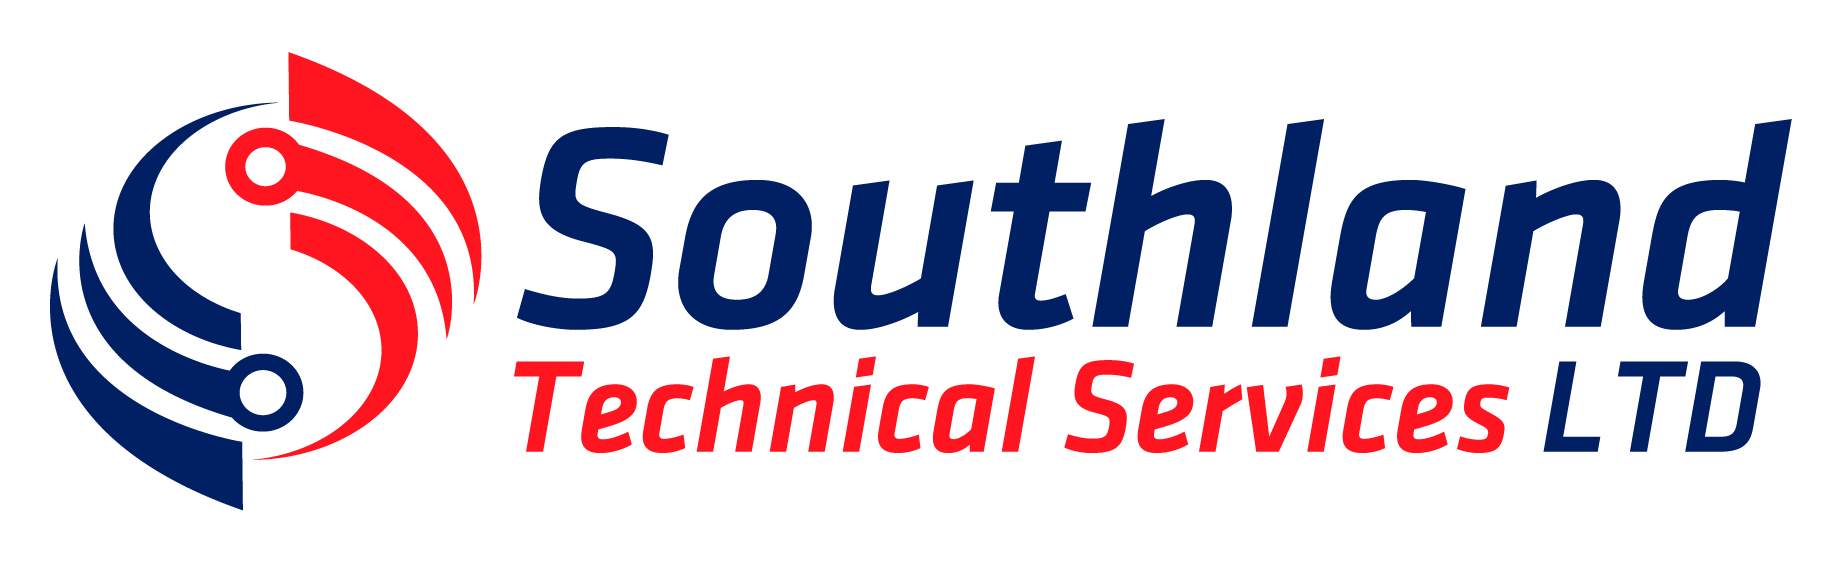 Appliance Repair Service Logo - Southland Technical Services LTD - Electronic Repair Calgary ...